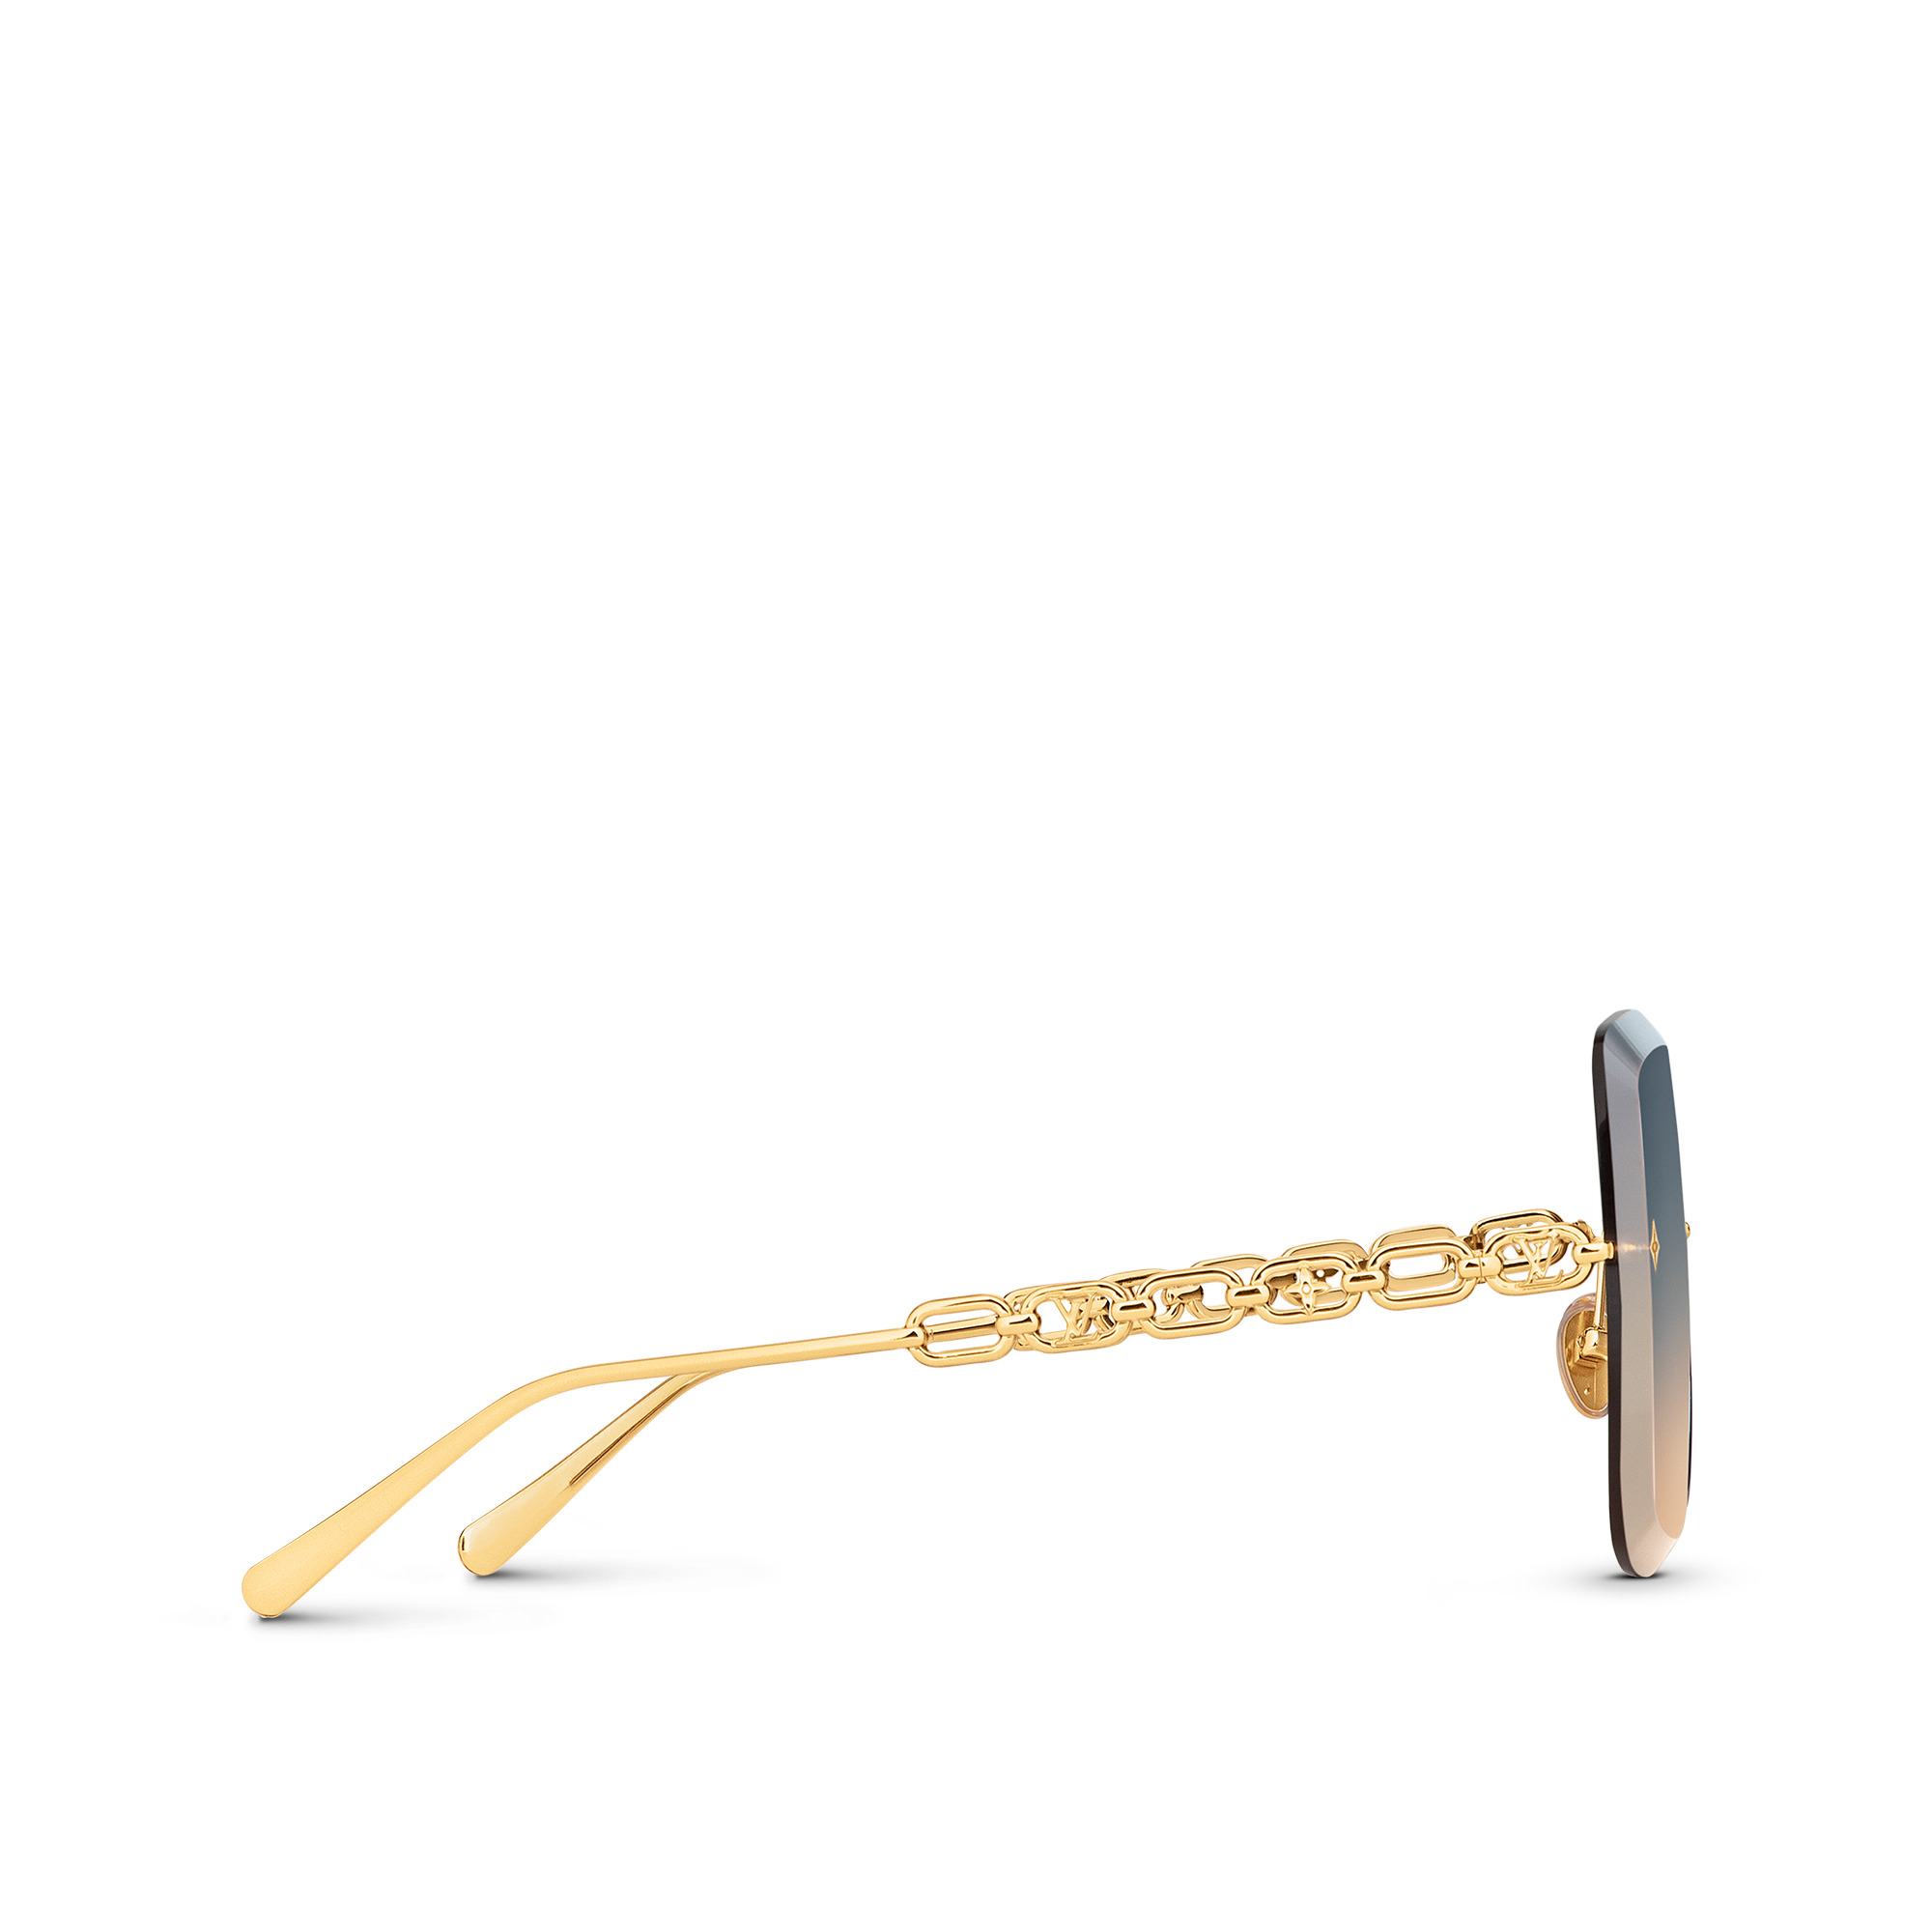 Louis Vuitton LV Jewel Cat Eye Sunglasses Gradient Blue Metal. Size U